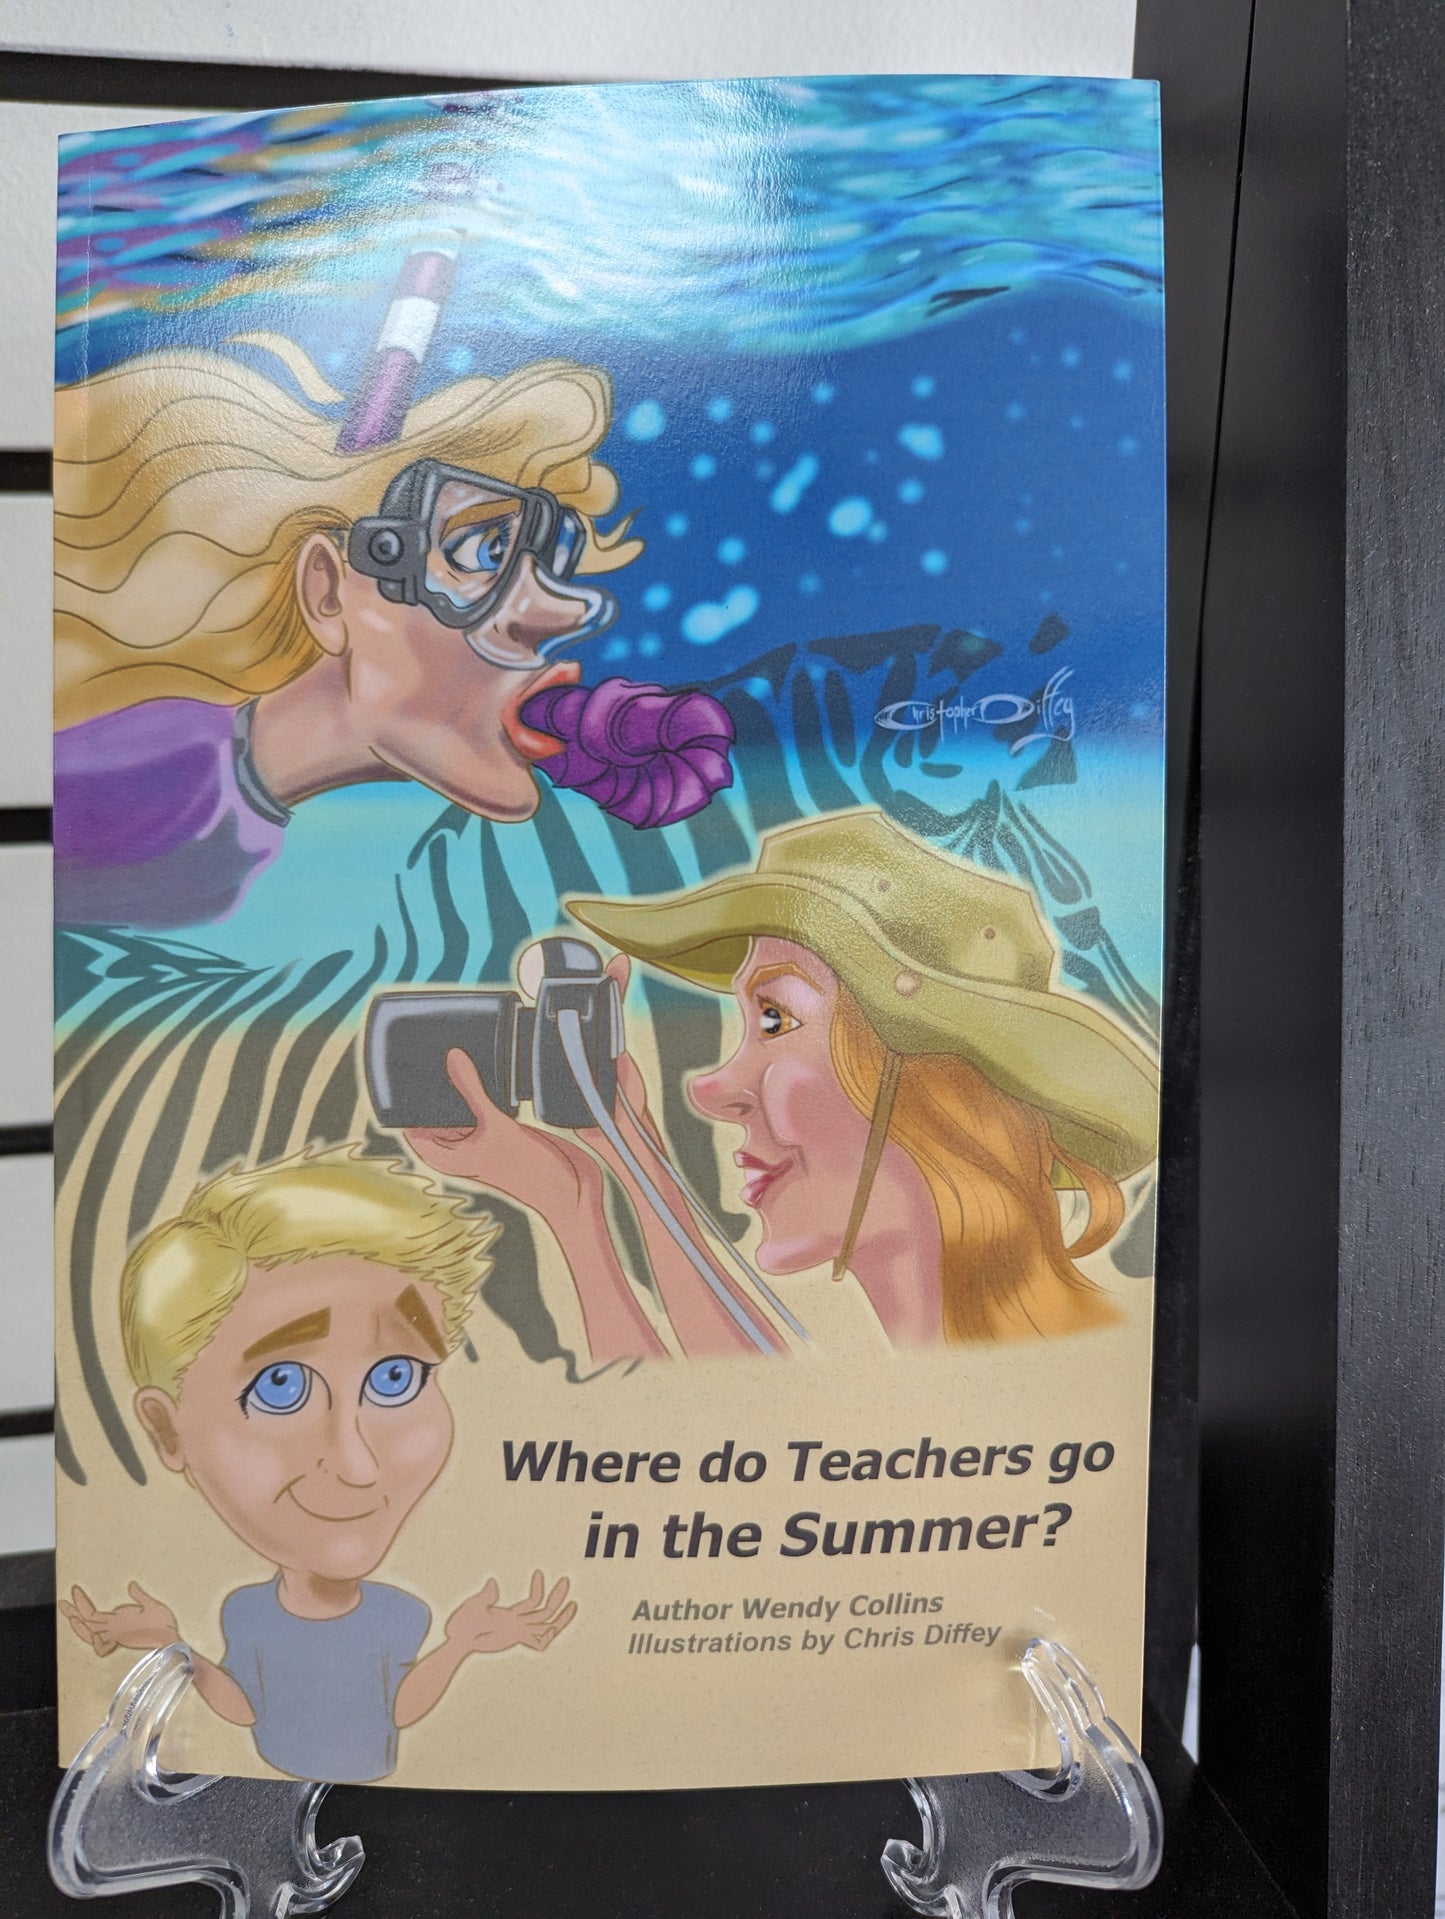 Where do Teachers go in the Summer